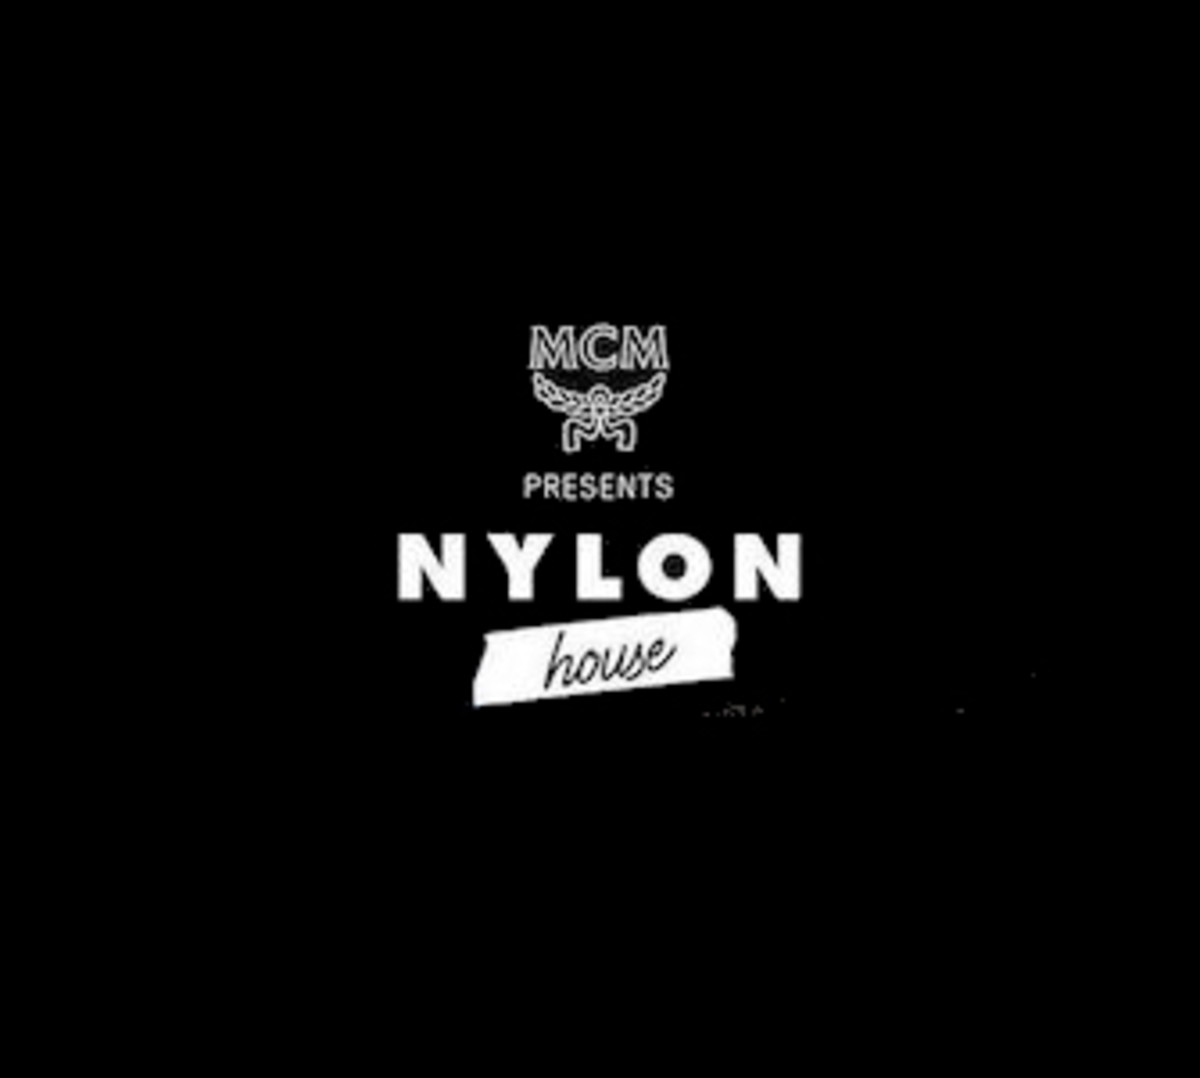 MCM presents NYLON House Coachella Weekend 1, 2022